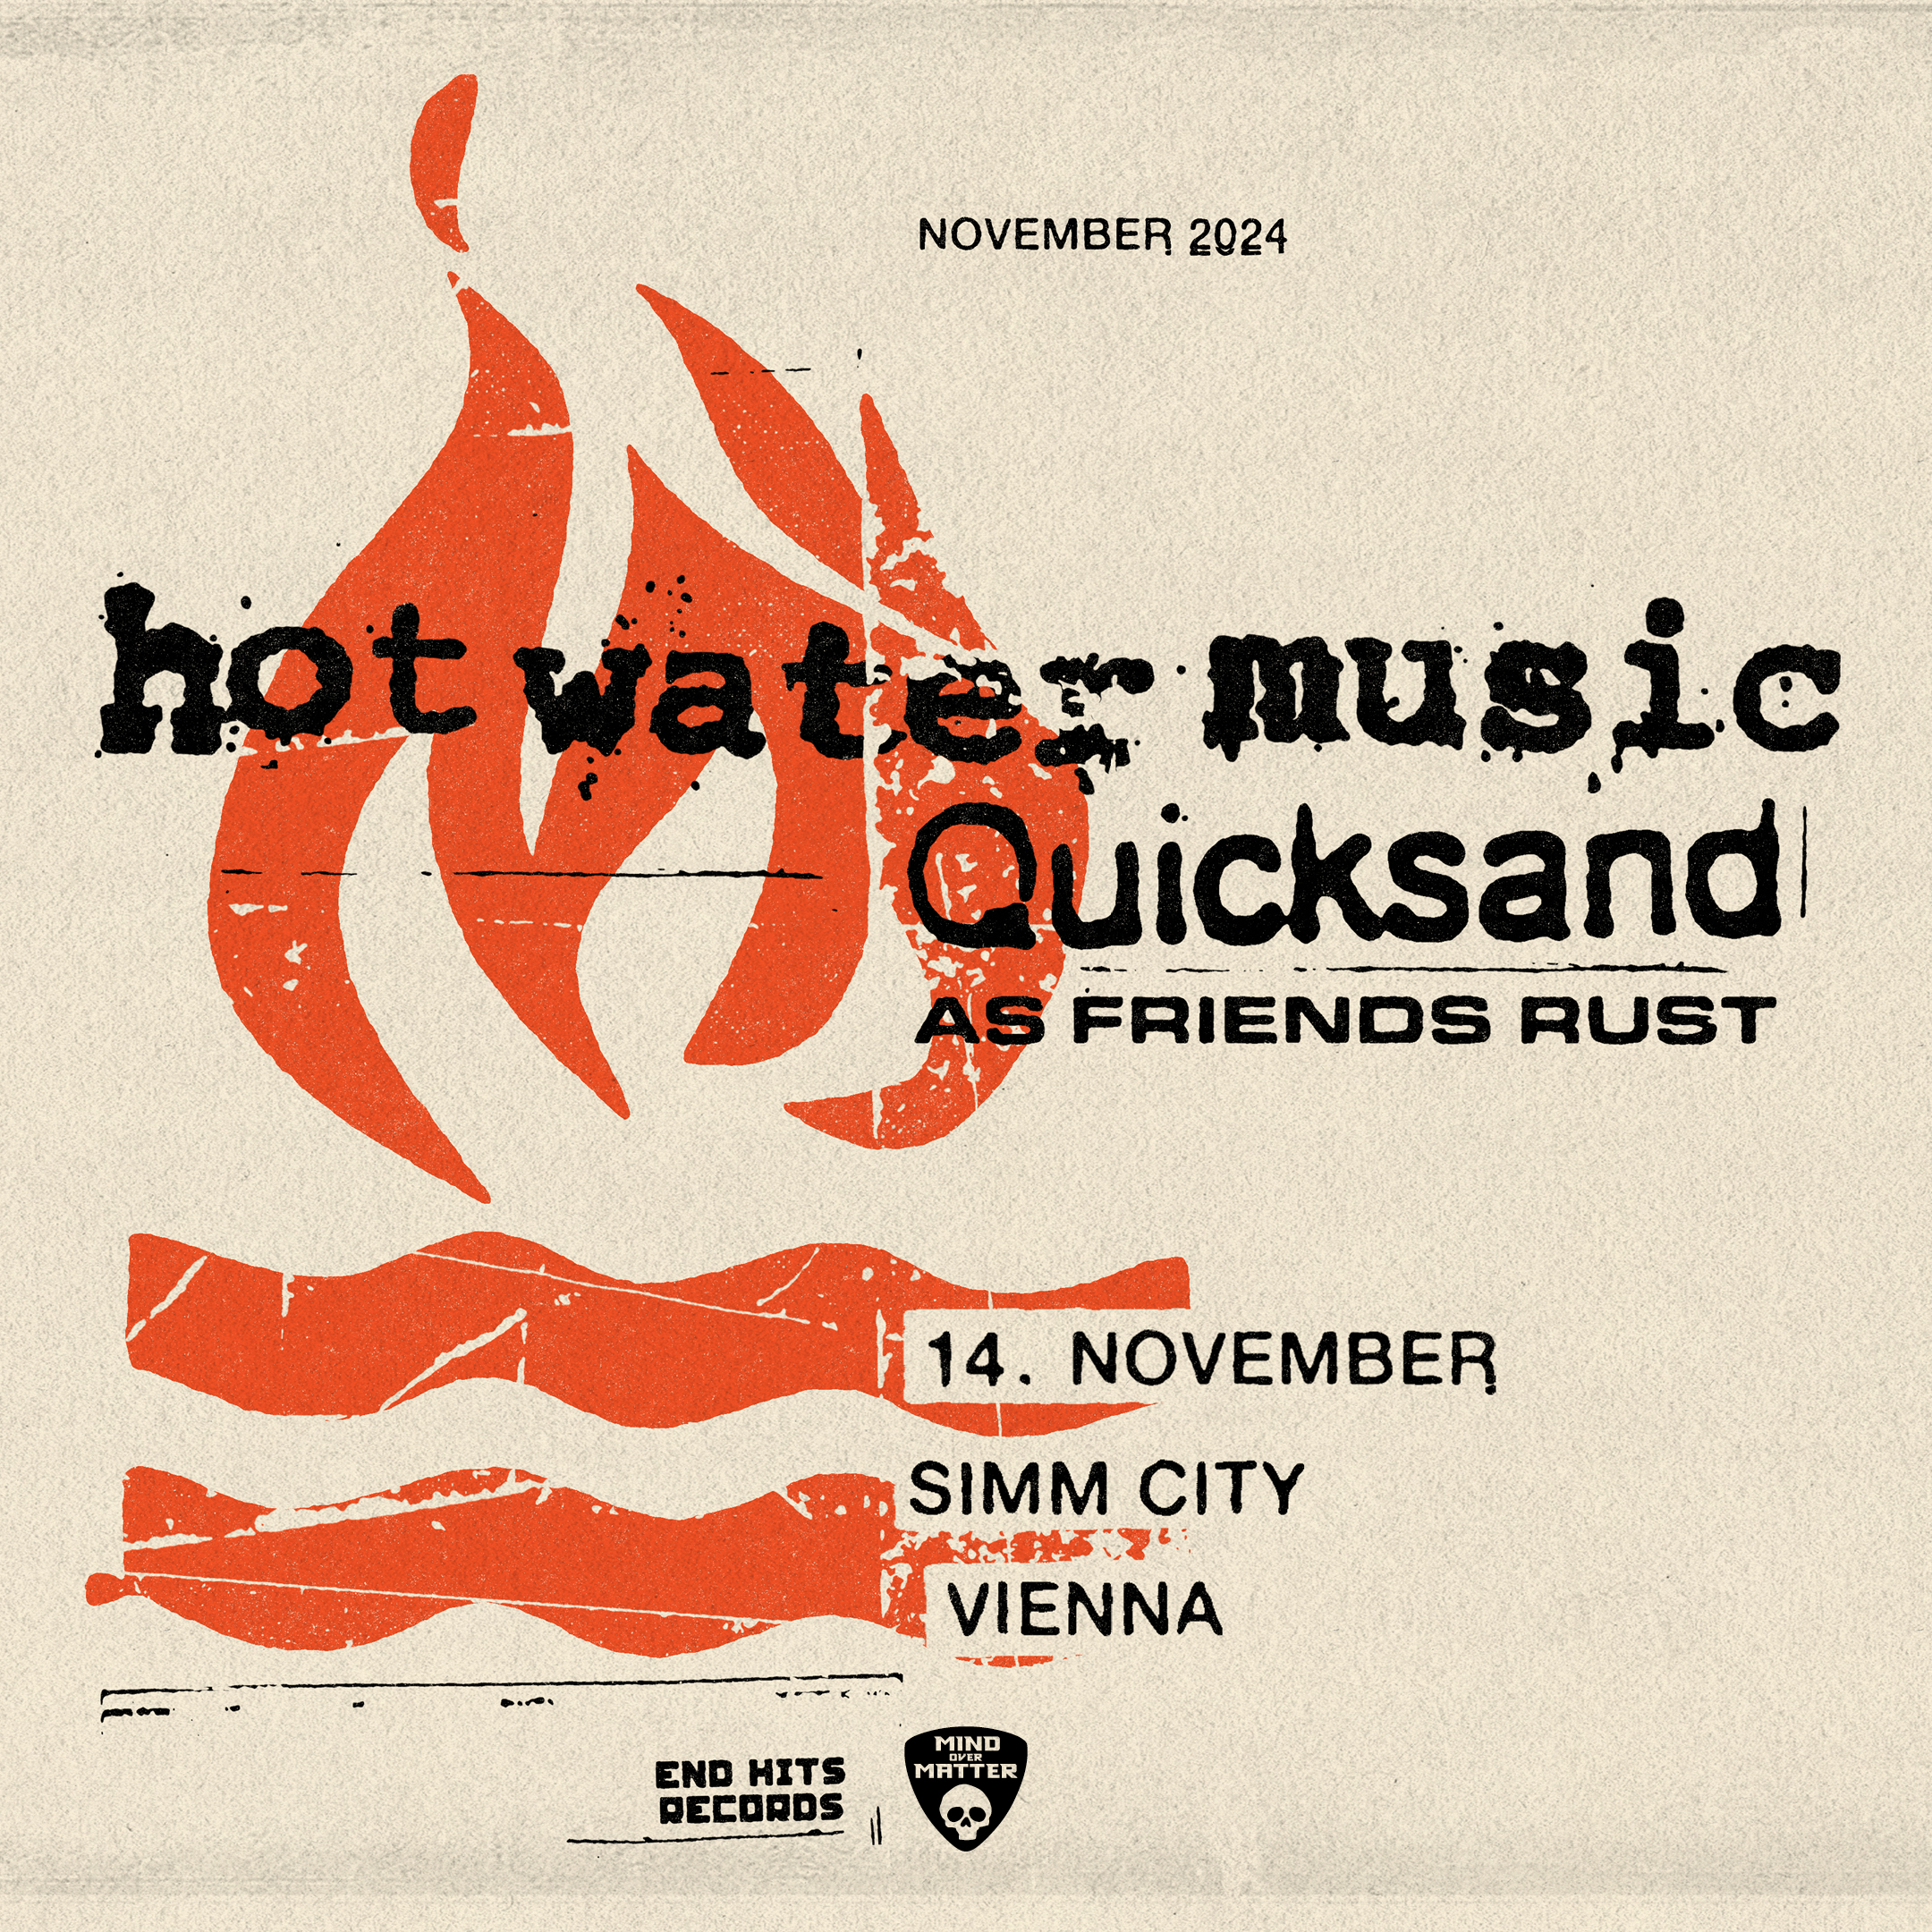 Hot Water Music am 14. November 2024 @ Simm City.